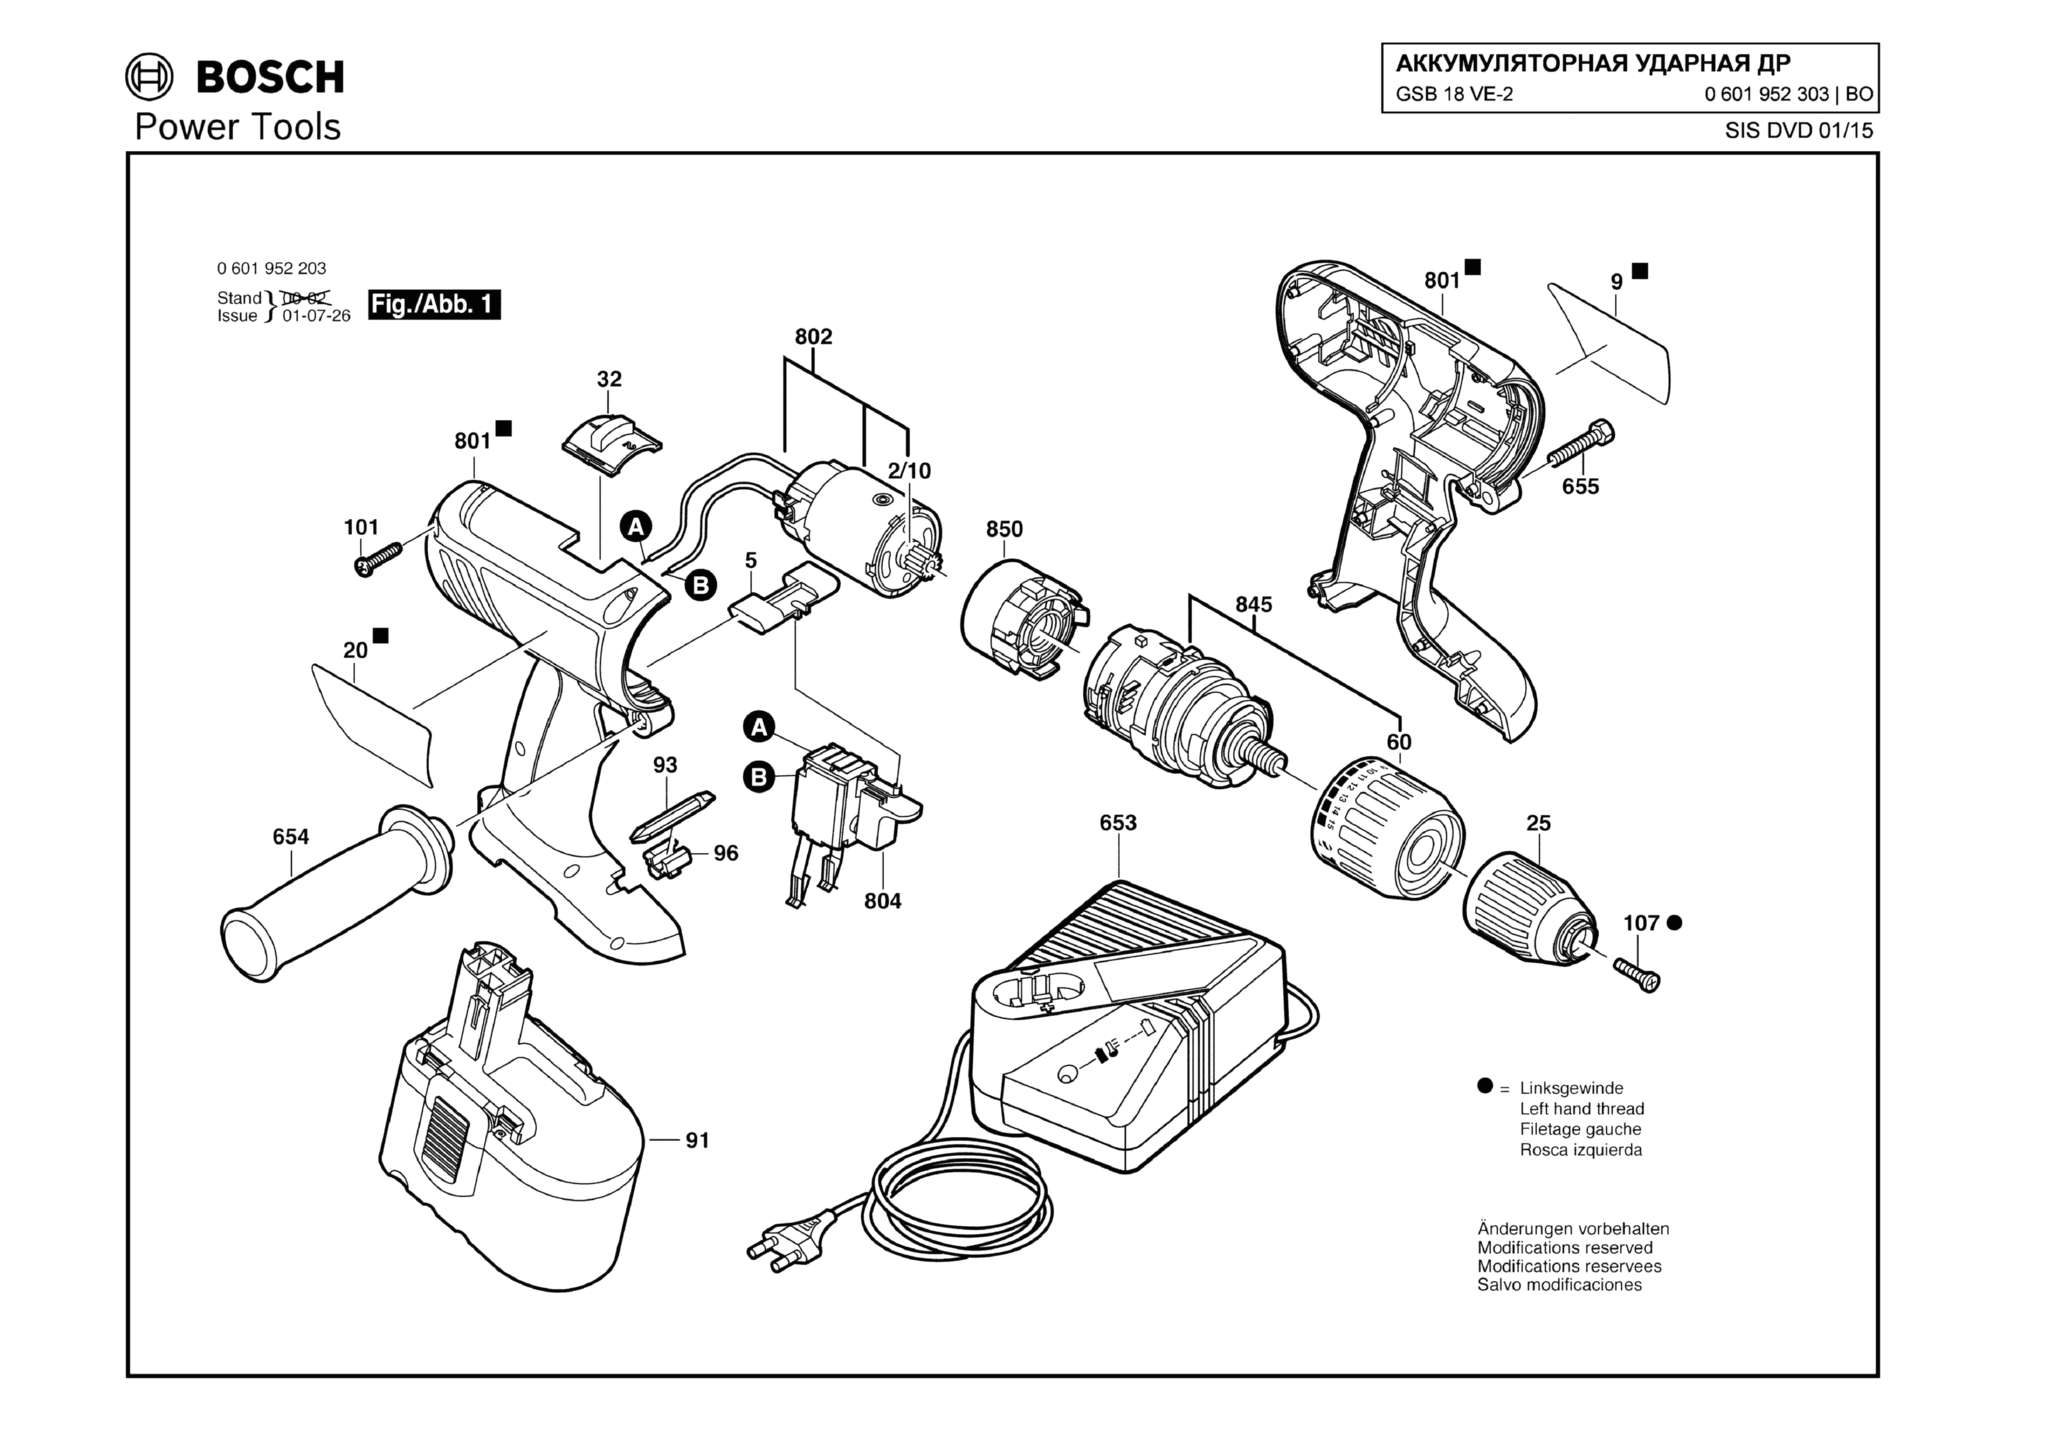 Запчасти, схема и деталировка Bosch GSB 18 VE-2 (ТИП 0601952303)